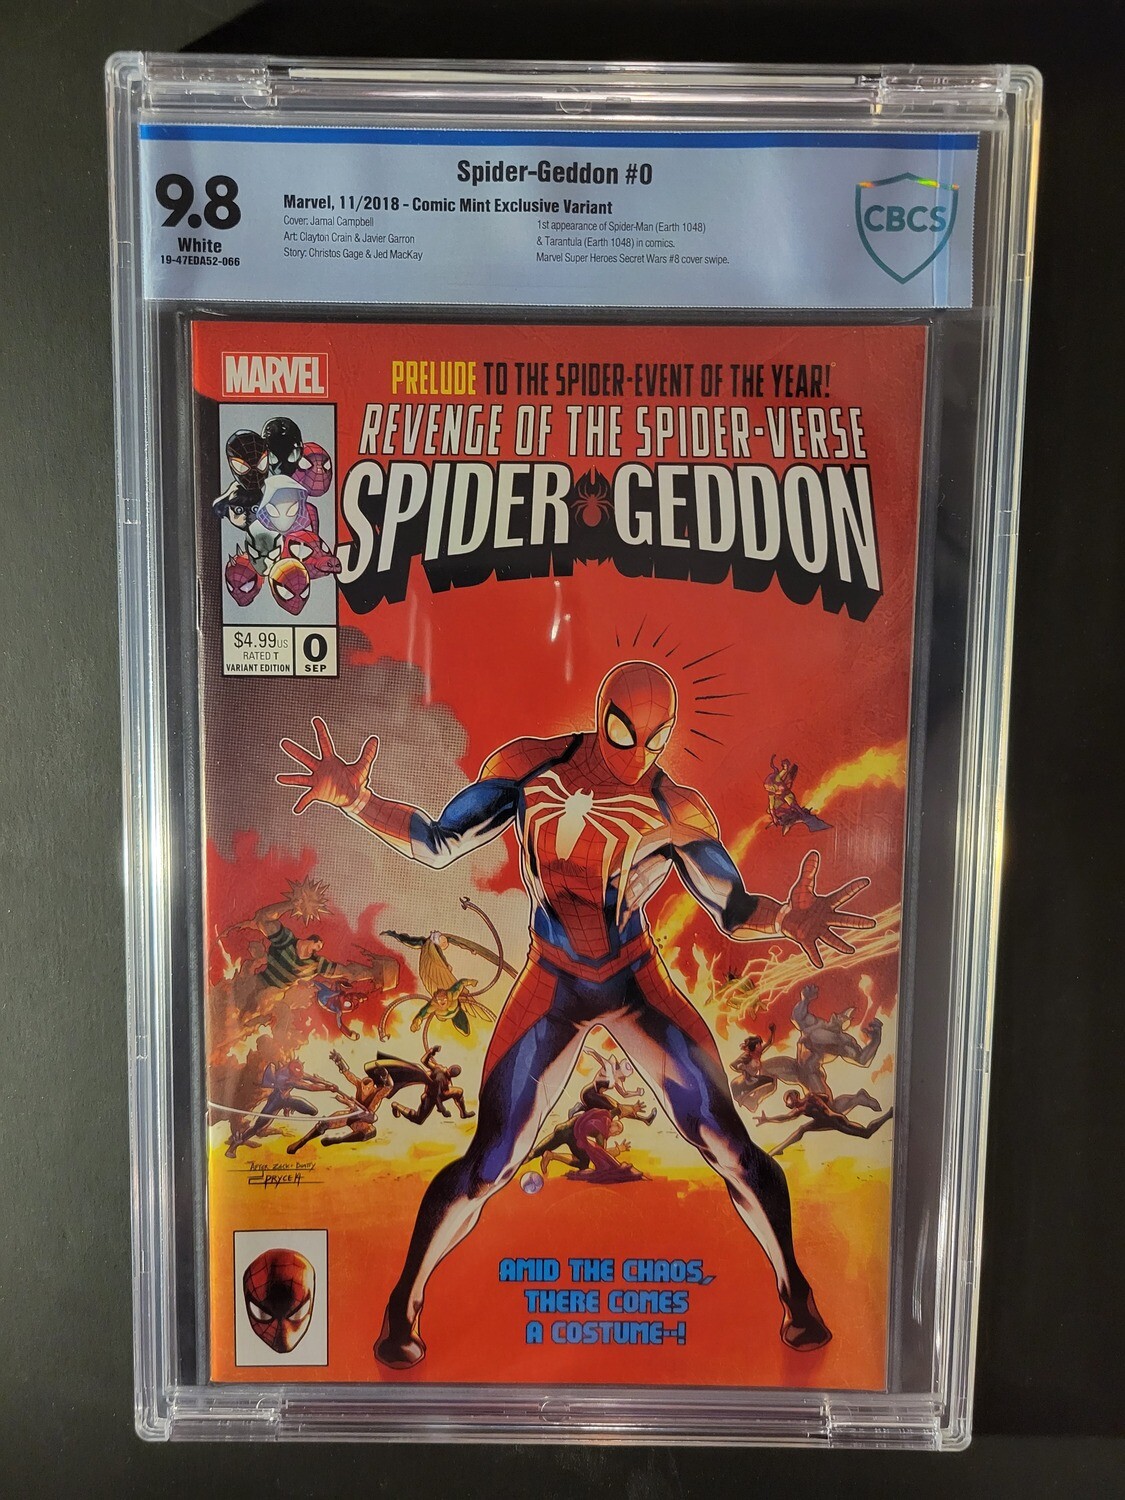 Spider-Geddon #0 (Comic Mint Edition) CBCS 9.8